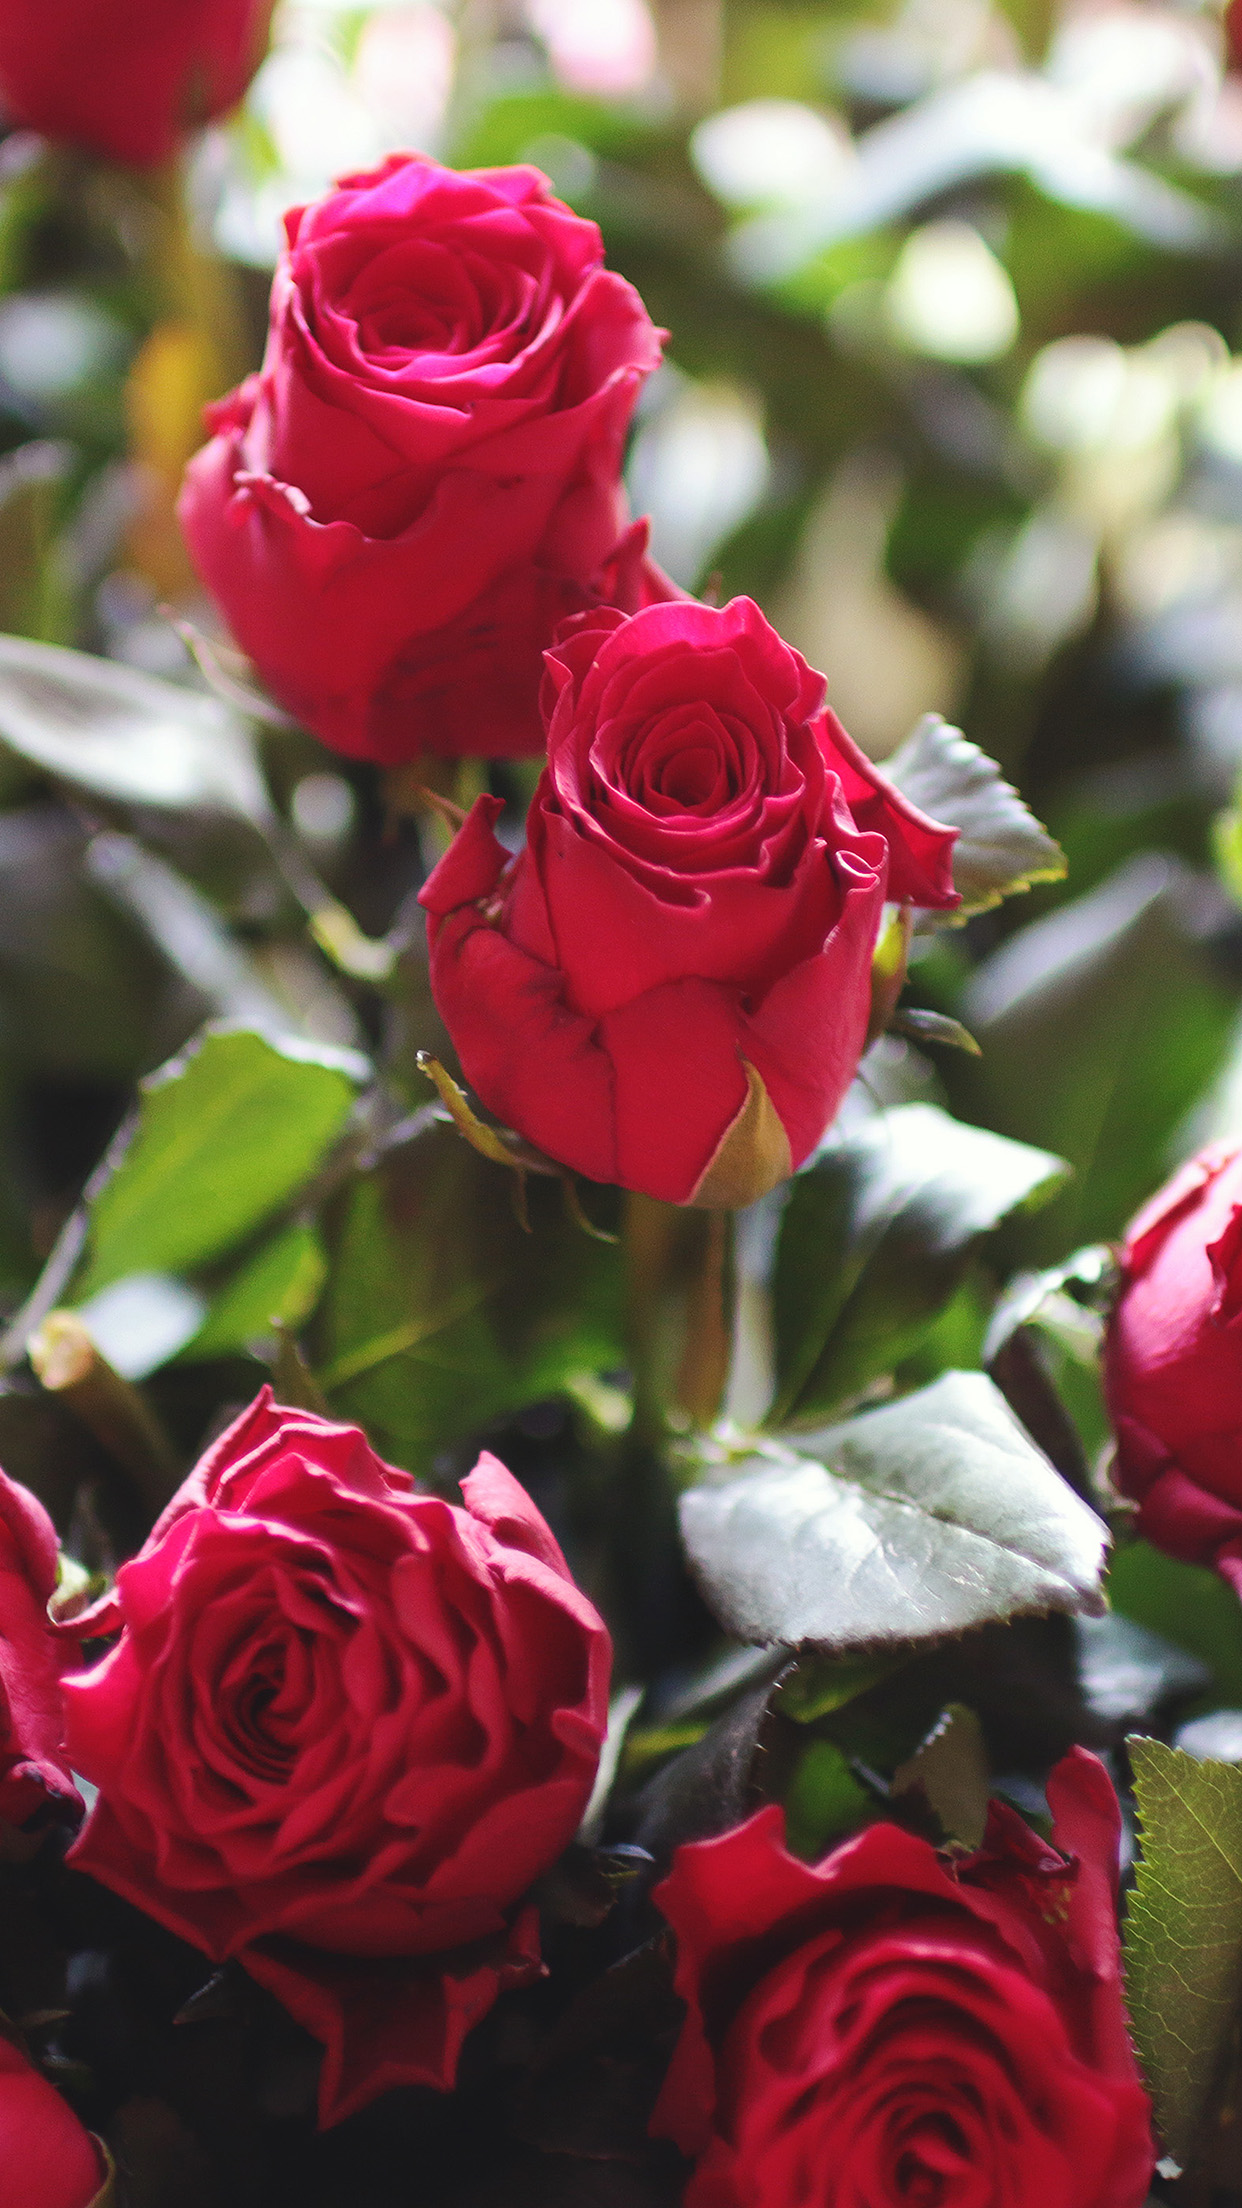 rote rosentapete,blume,gartenrosen,blühende pflanze,julia kind stand auf,rose